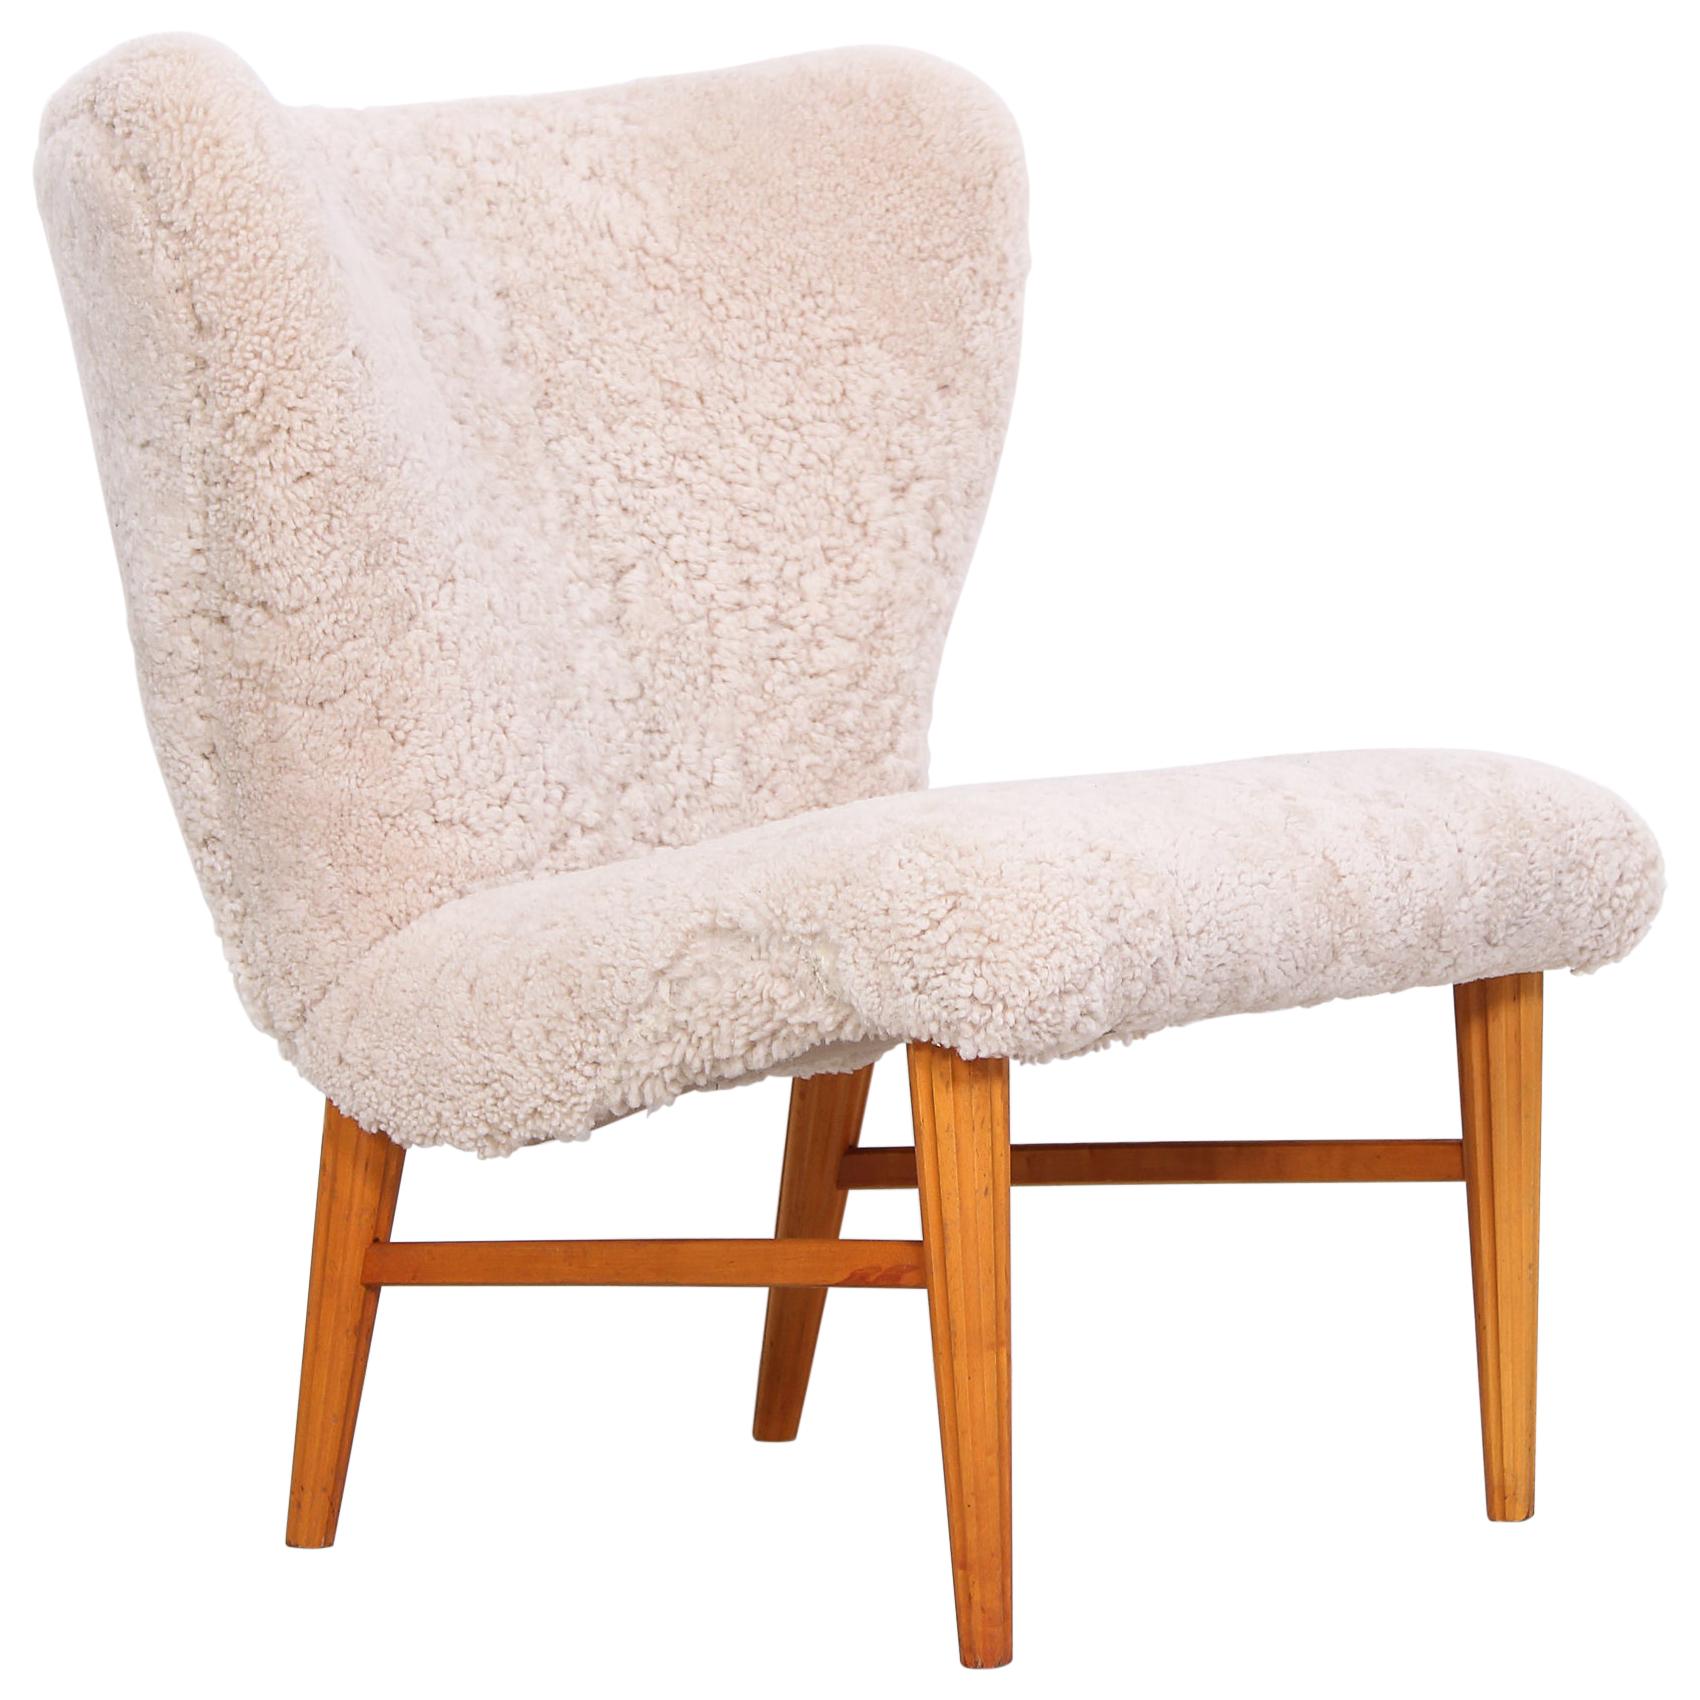 1940s Swedish Sheepskin Easy Chair